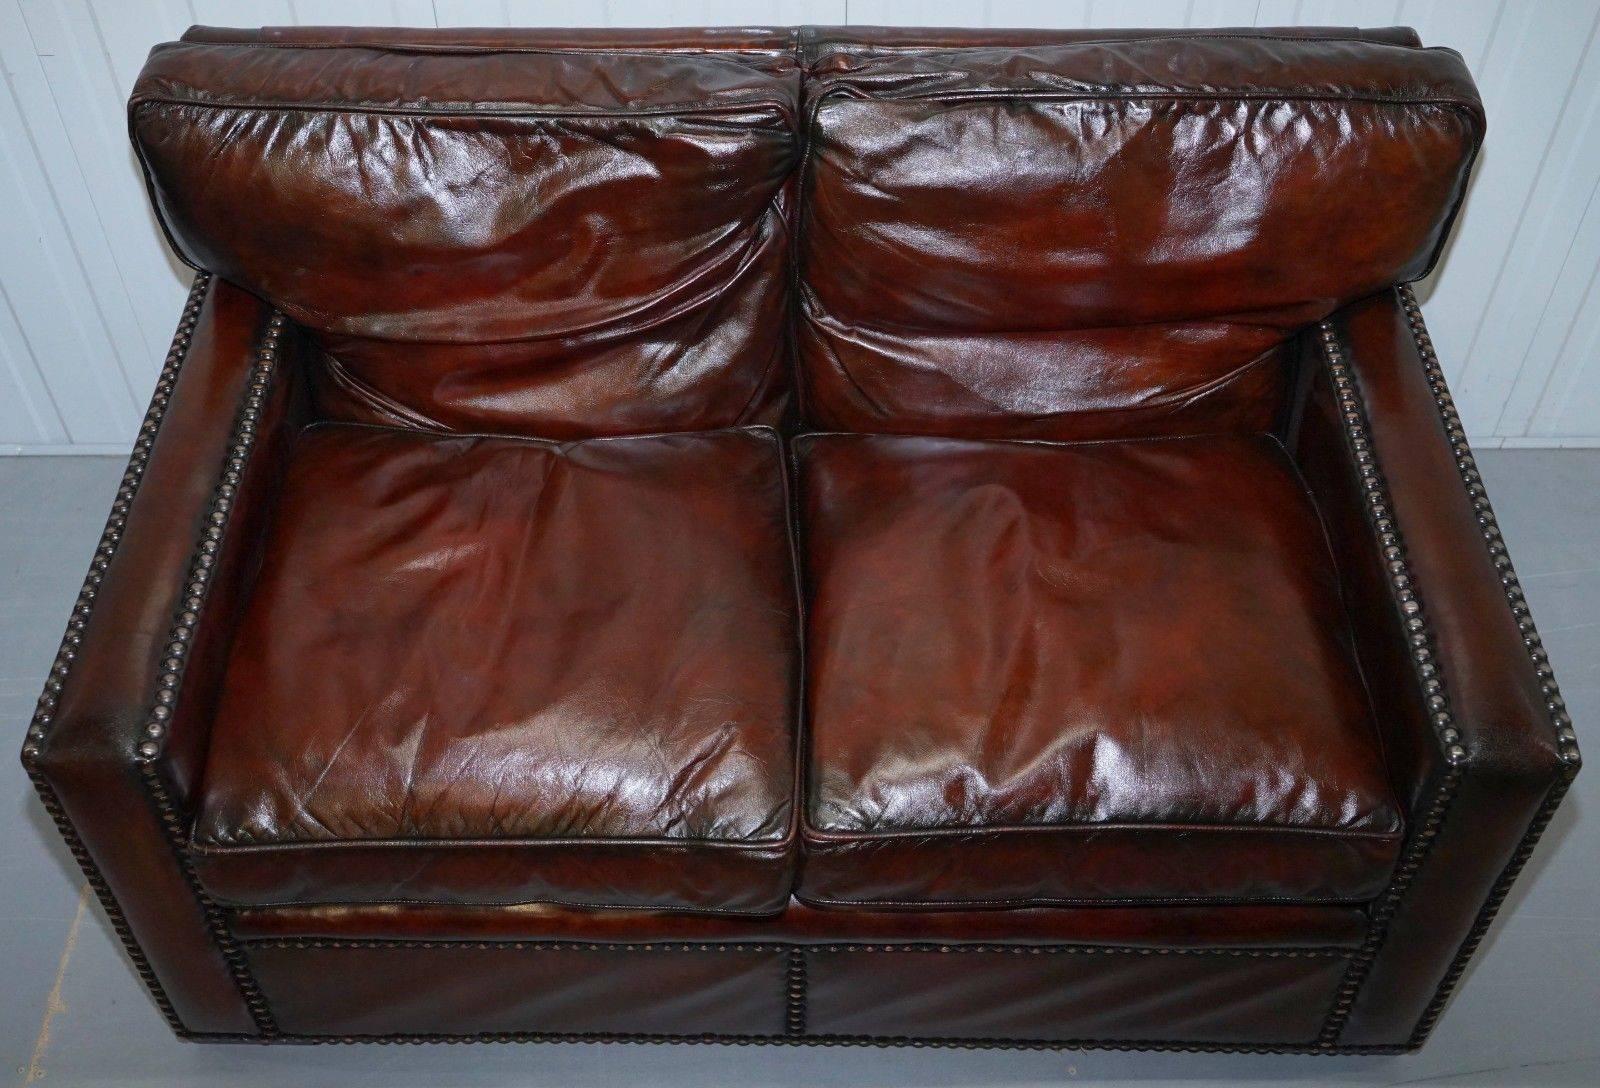 Victorian Restored Vintage Handmade in Chelsea Bordeaux Leather Sofa Part of Huge Suite